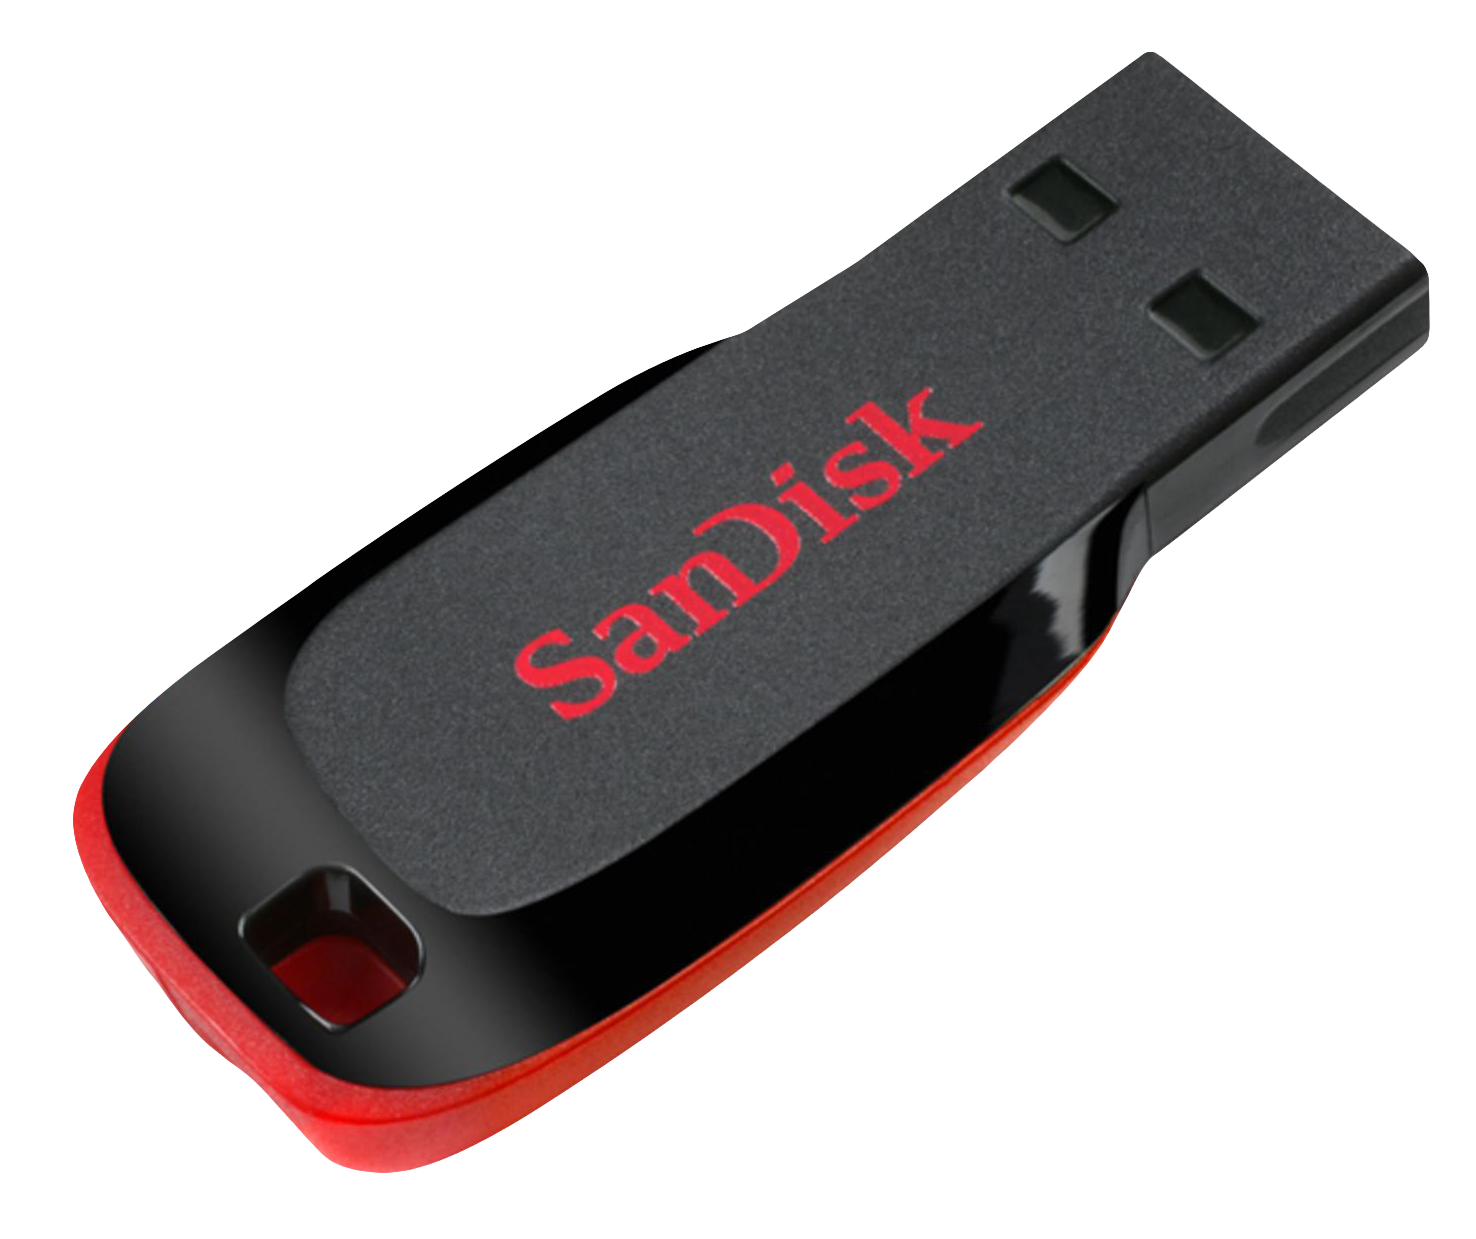 USB Flash Drive PNG Free File Download